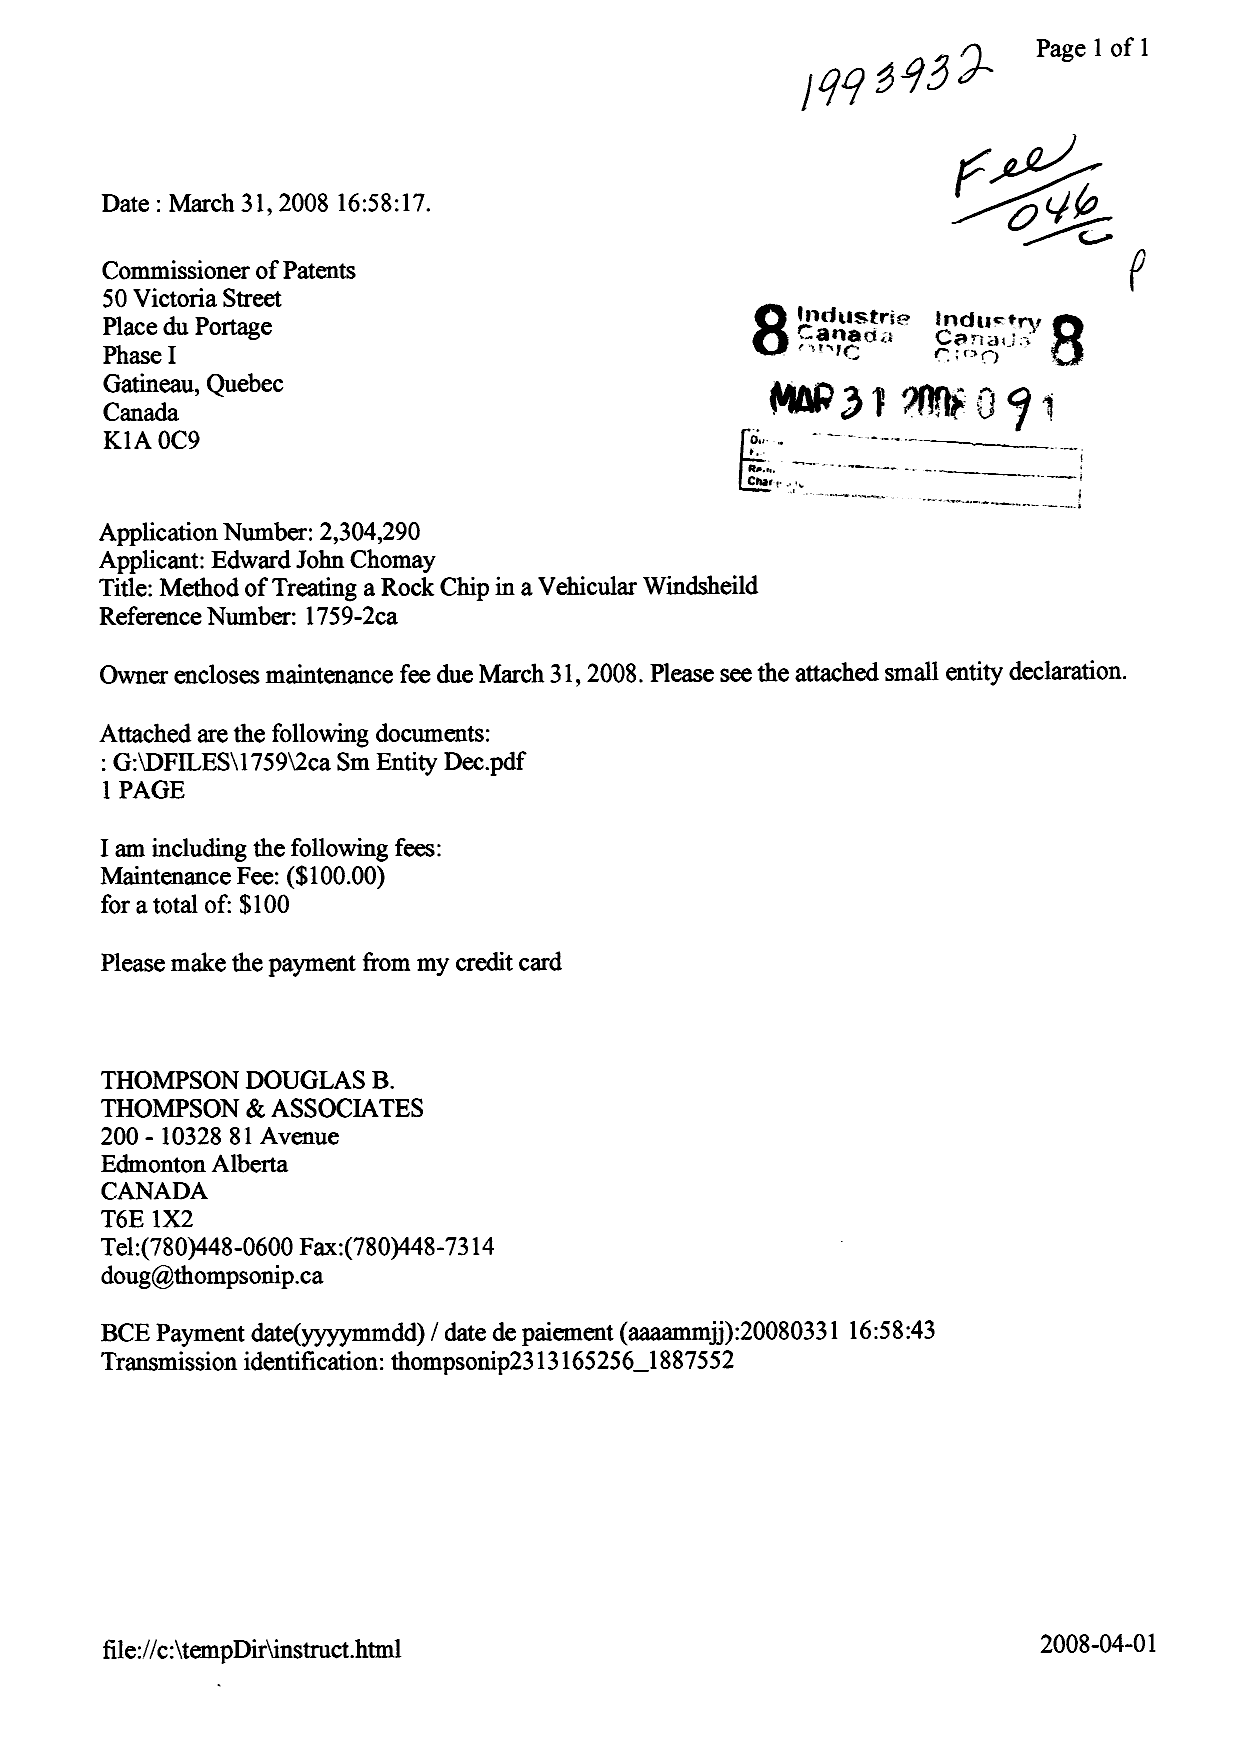 Canadian Patent Document 2304290. Correspondence 20080331. Image 1 of 2